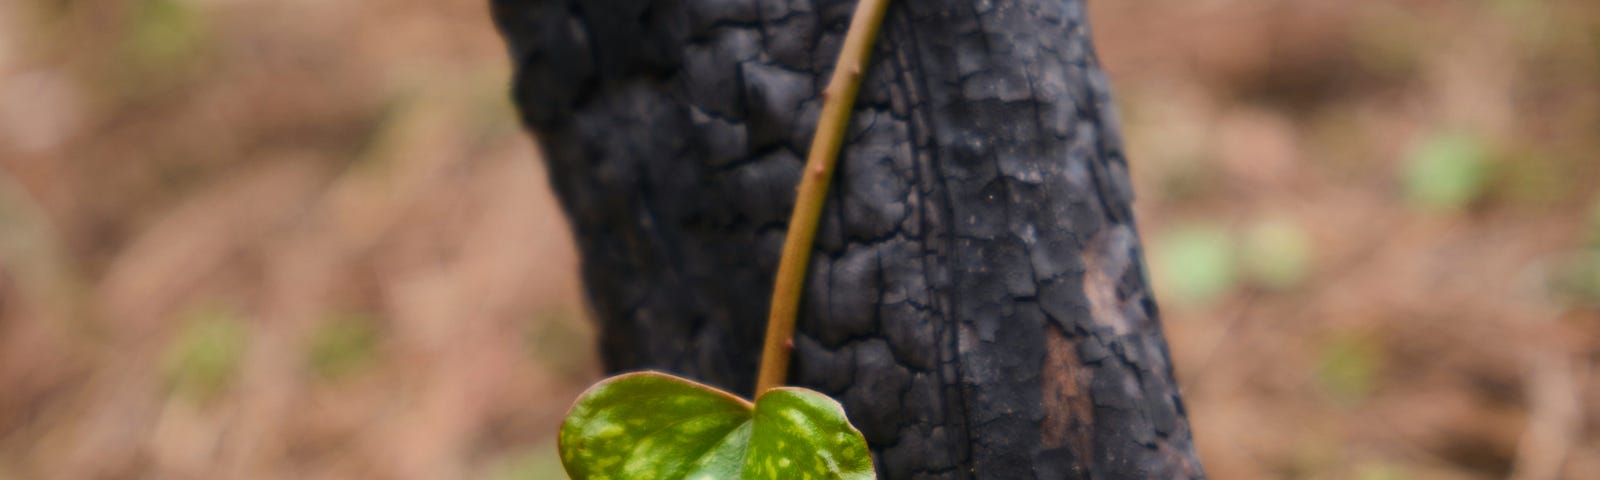 A new leaf against a charred tree